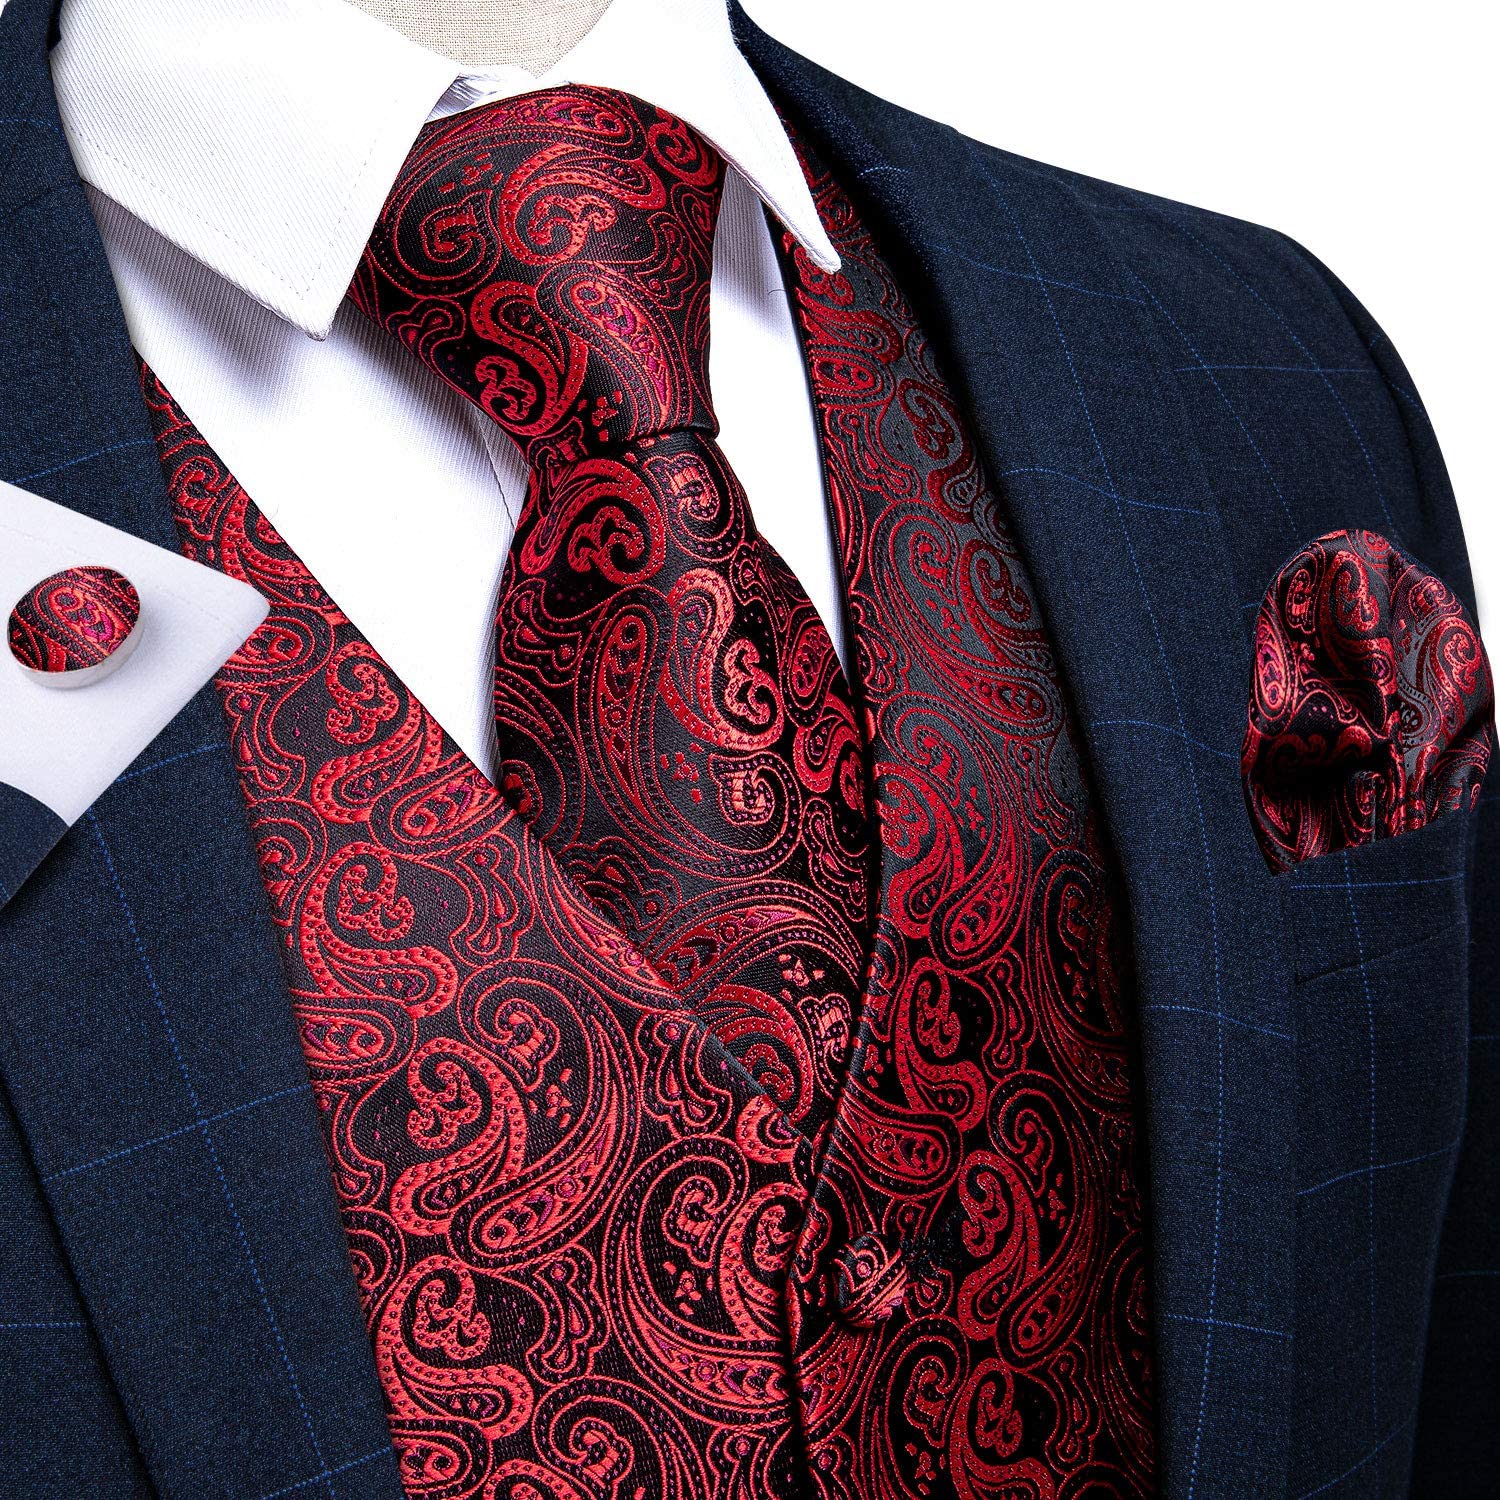 DiBanGu Mens Wedding Paisley Suit Vest Waistcoat Necktie and Pocket Square Cufflinks Formal